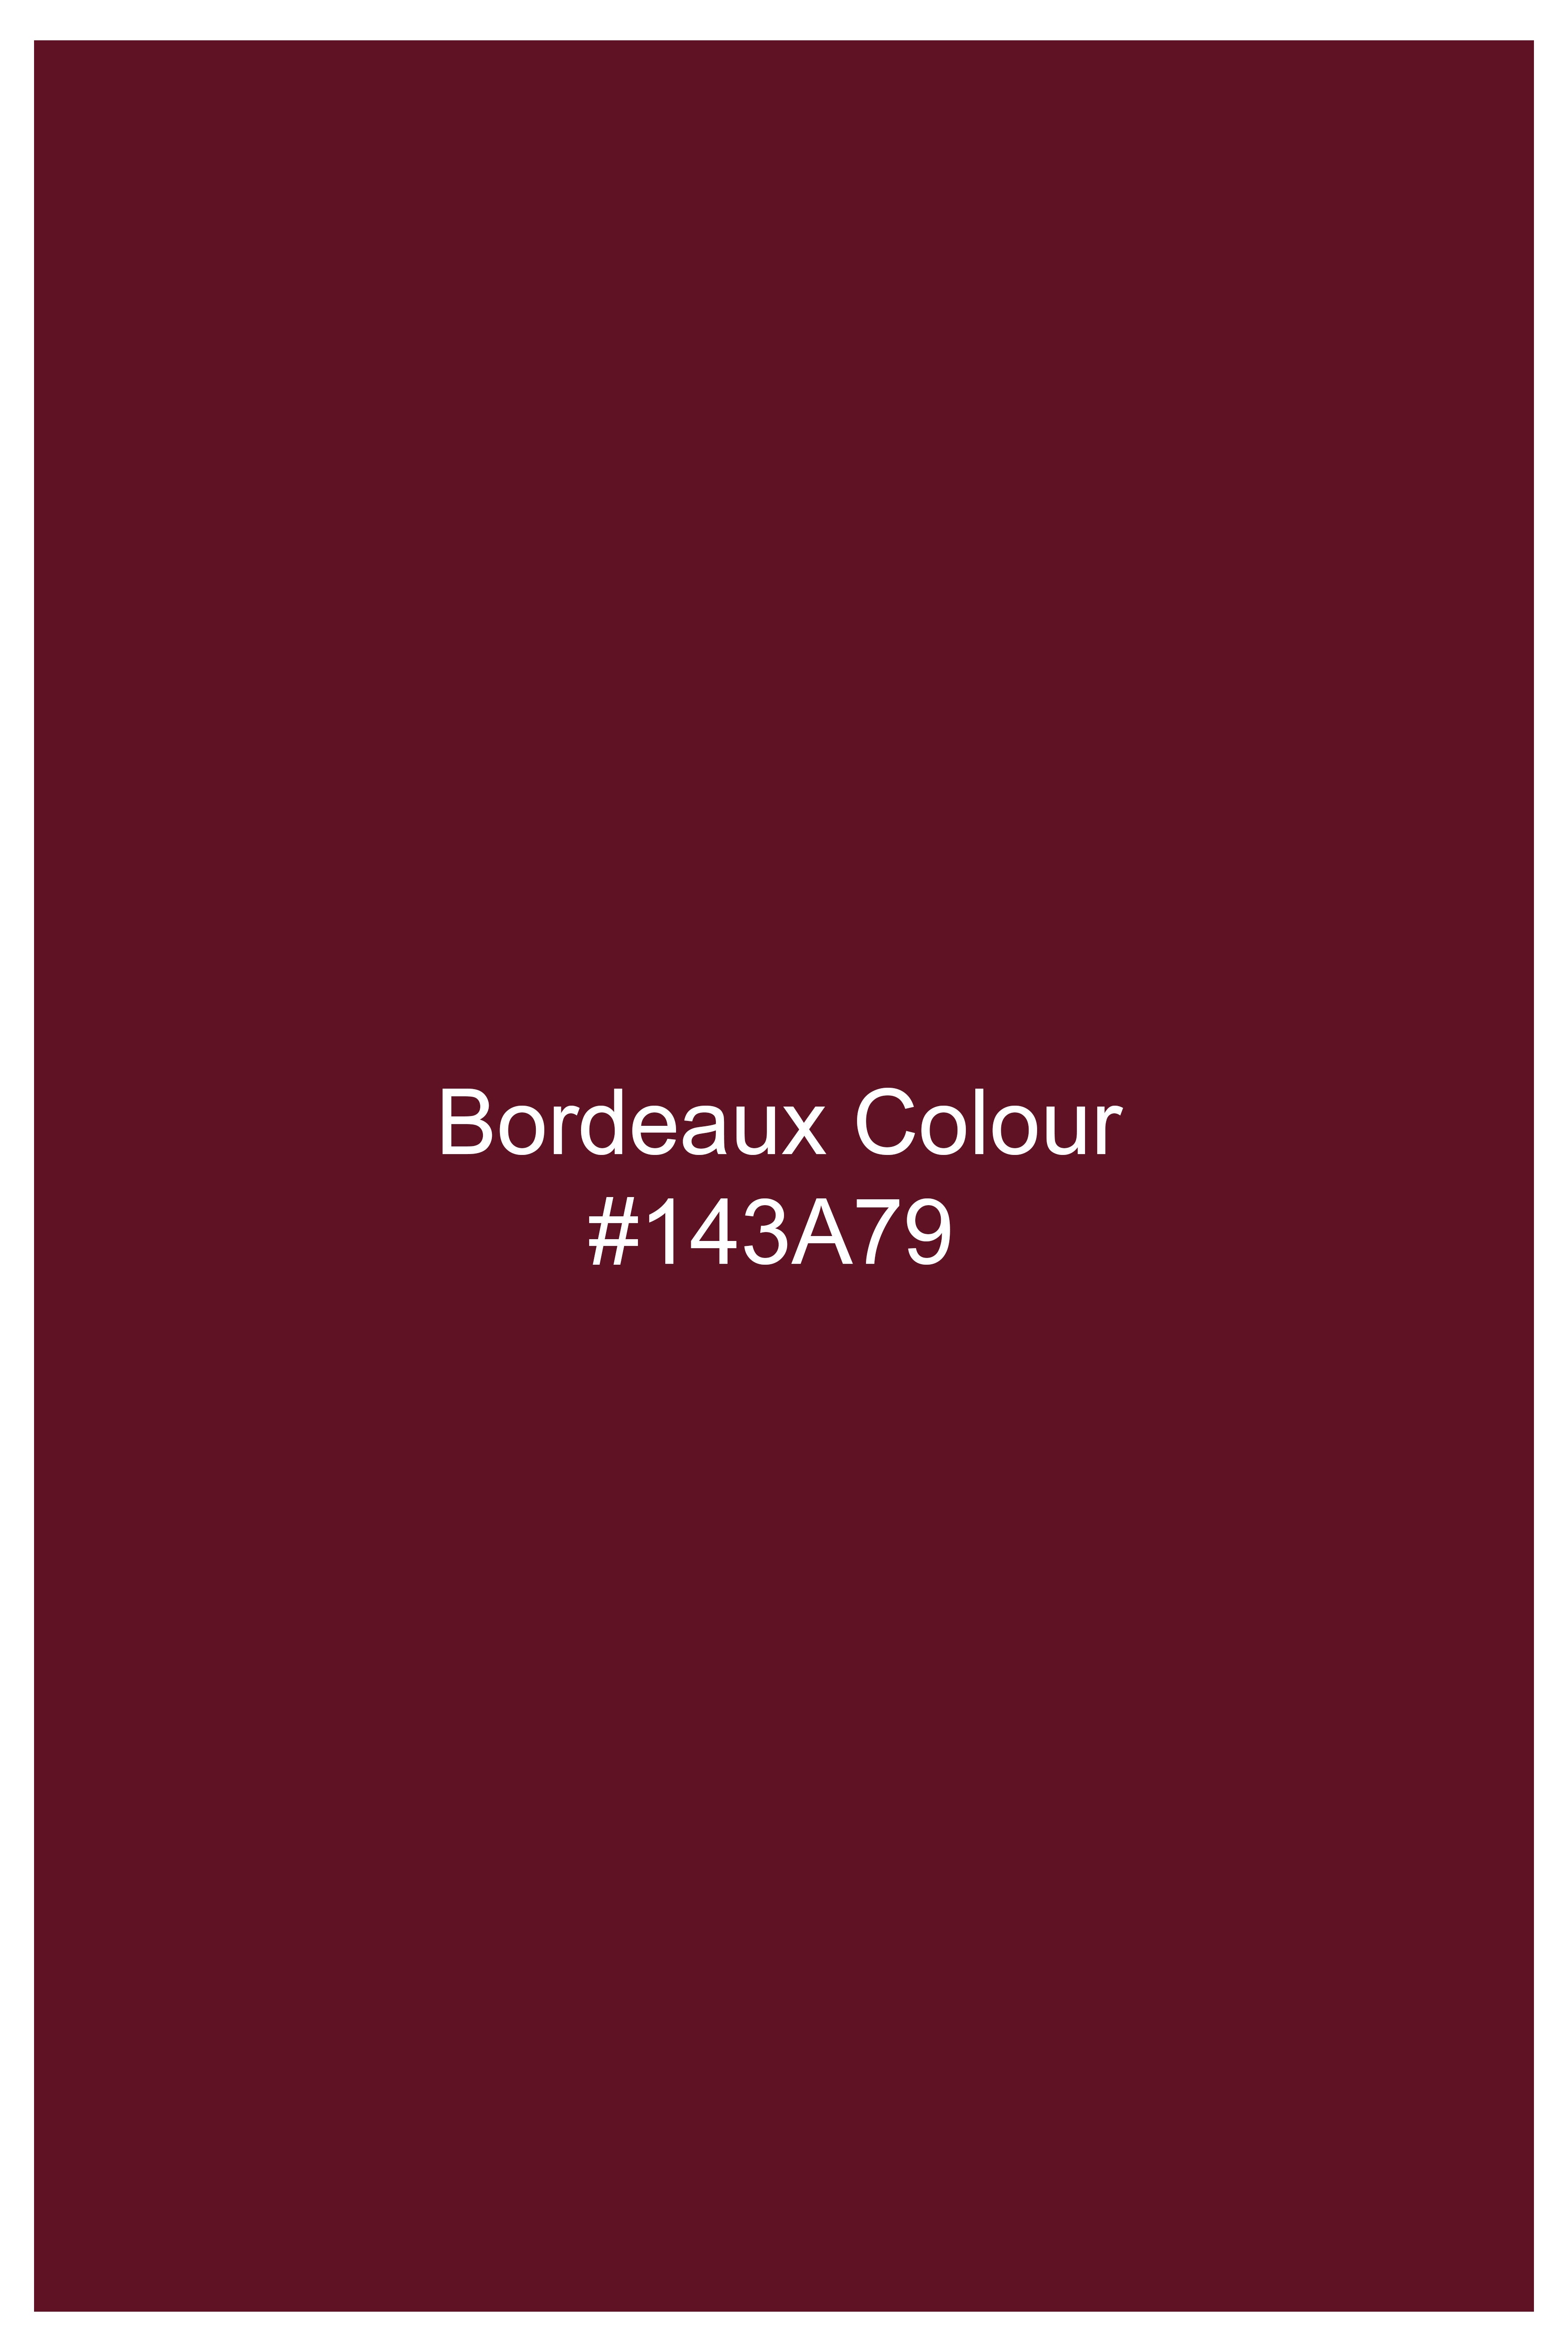 Bordeaux Maroon Corduroy Premium Cotton Bomber Jacket